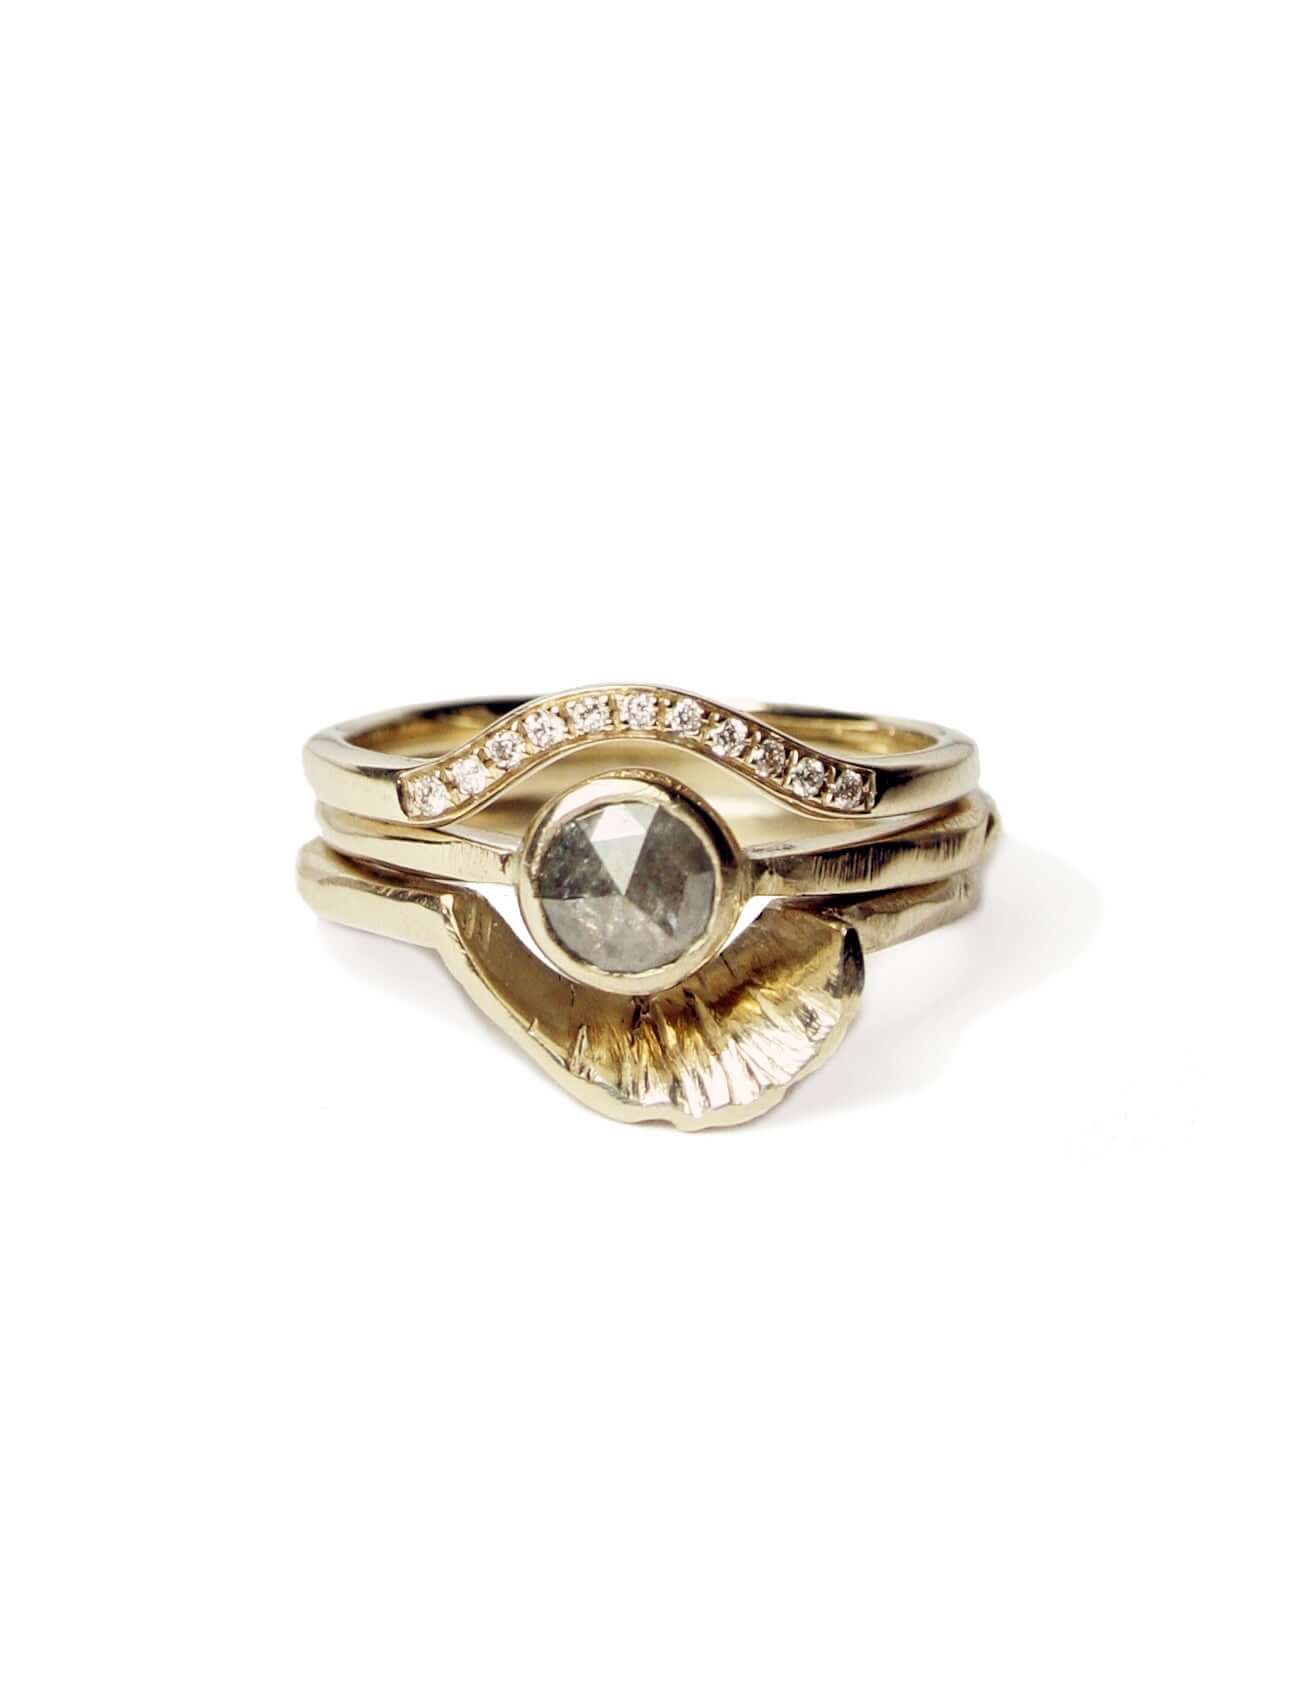 Fern sculptural wedding Ring Gold, Ring, Macha Studio, Brooklyn NYC